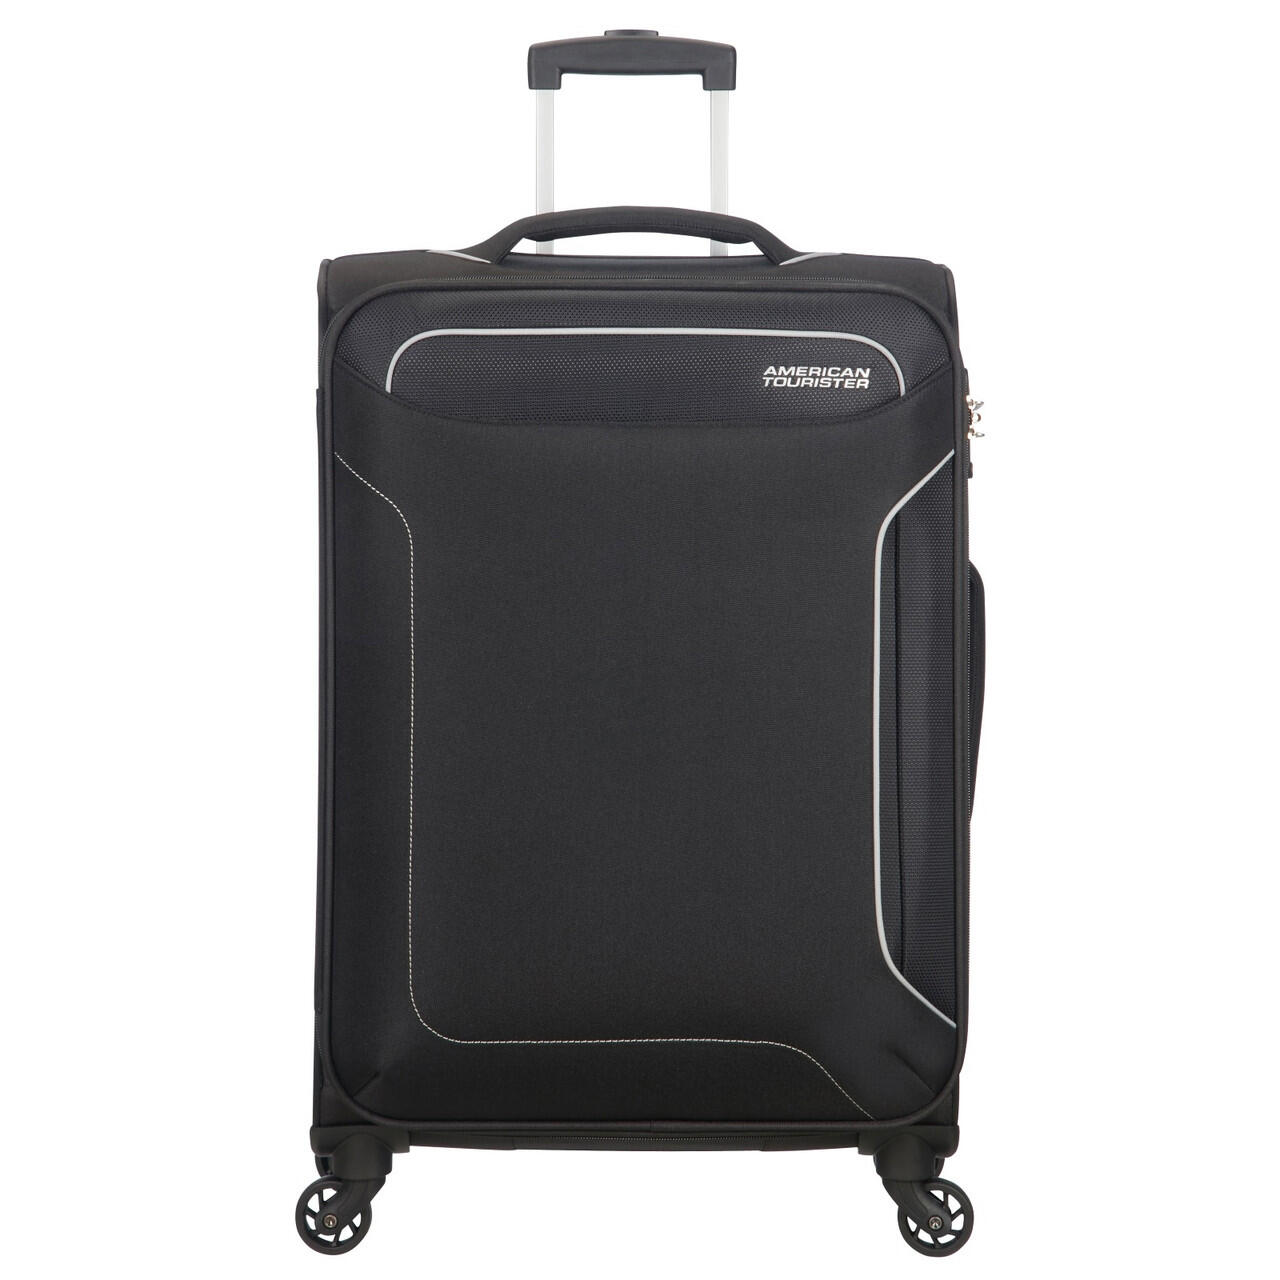 Holiday Heat 4 Wheel Suitcase - 67cm - Black 1/5